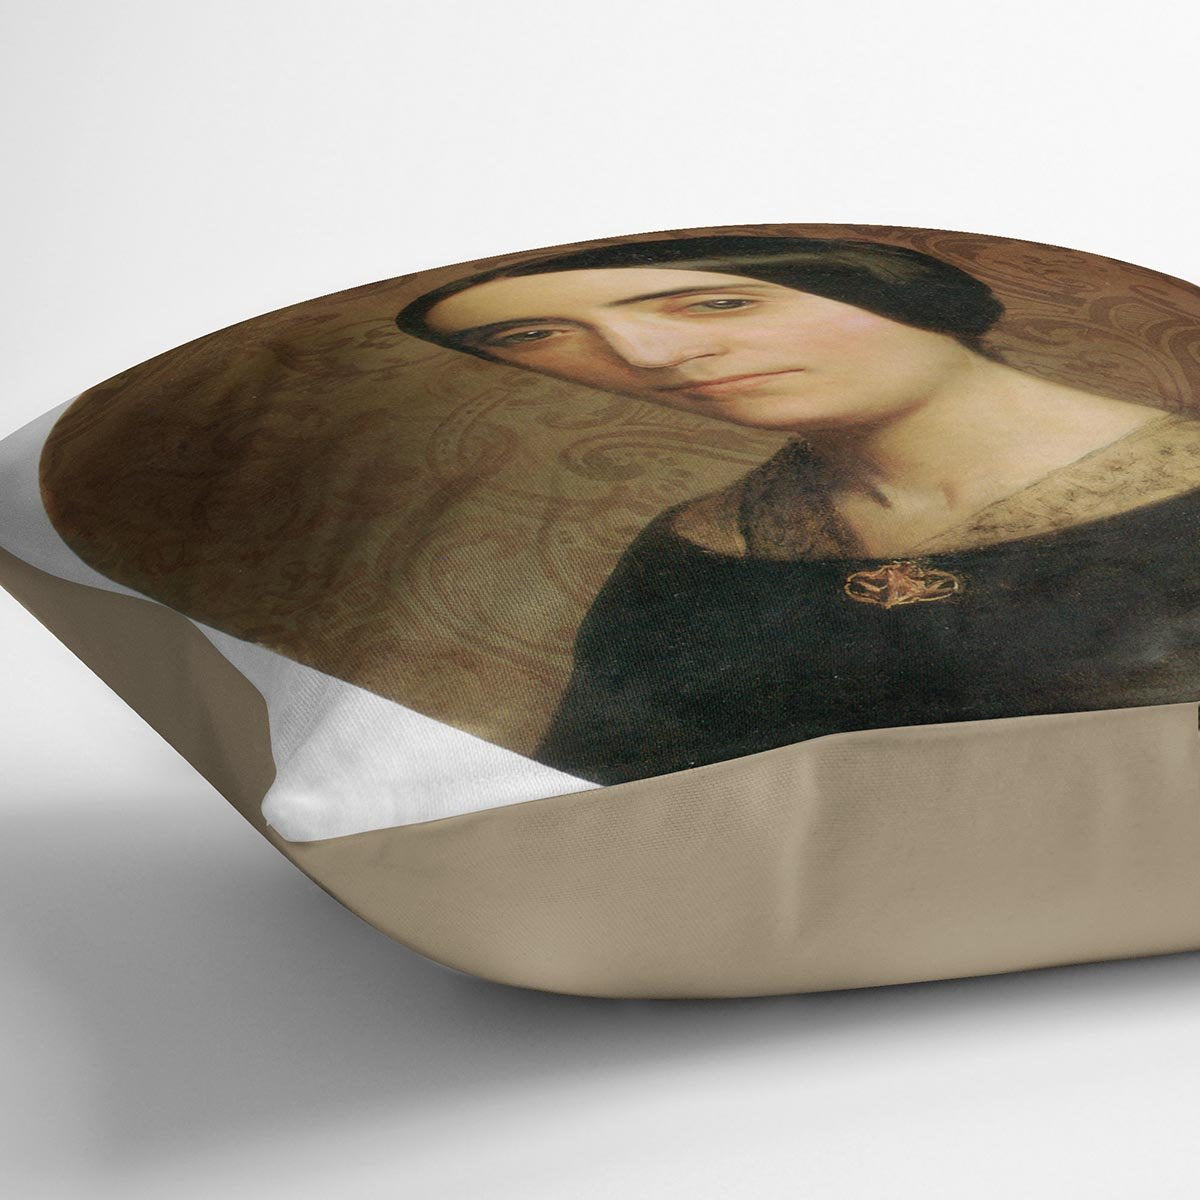 A Portrait of Amelina Dufaud Bouguereau 1850 By Bouguereau Throw Pillow